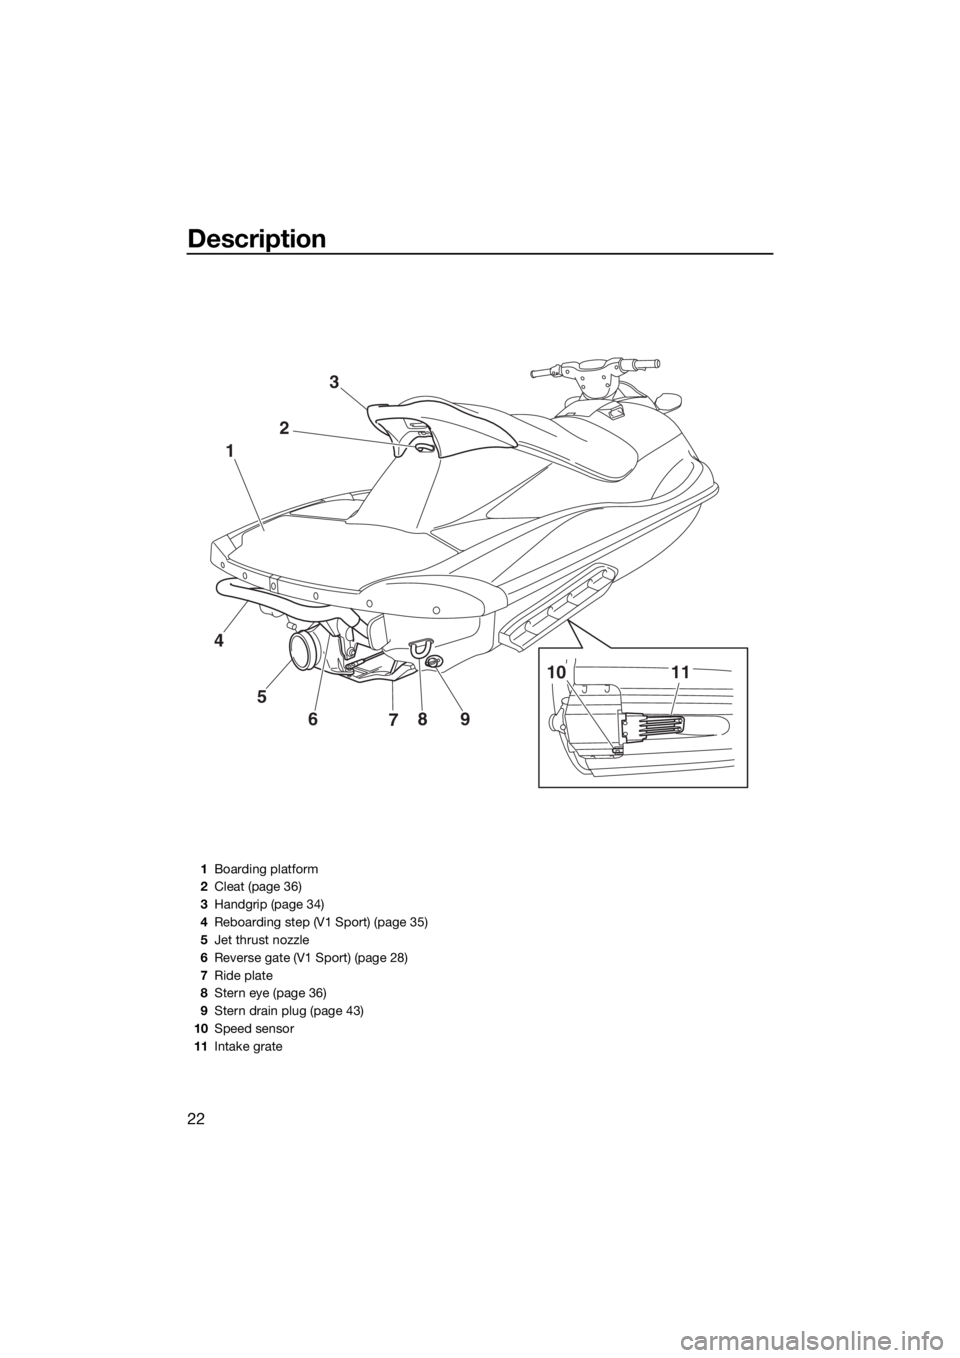 YAMAHA V1 SPORT 2015 Owners Manual Description
22
9
8
7 6 5 4123
10 11
1Boarding platform
2Cleat (page 36)
3Handgrip (page 34)
4Reboarding step (V1 Sport) (page 35)
5Jet thrust nozzle
6Reverse gate (V1 Sport) (page 28)
7Ride plate
8Ste